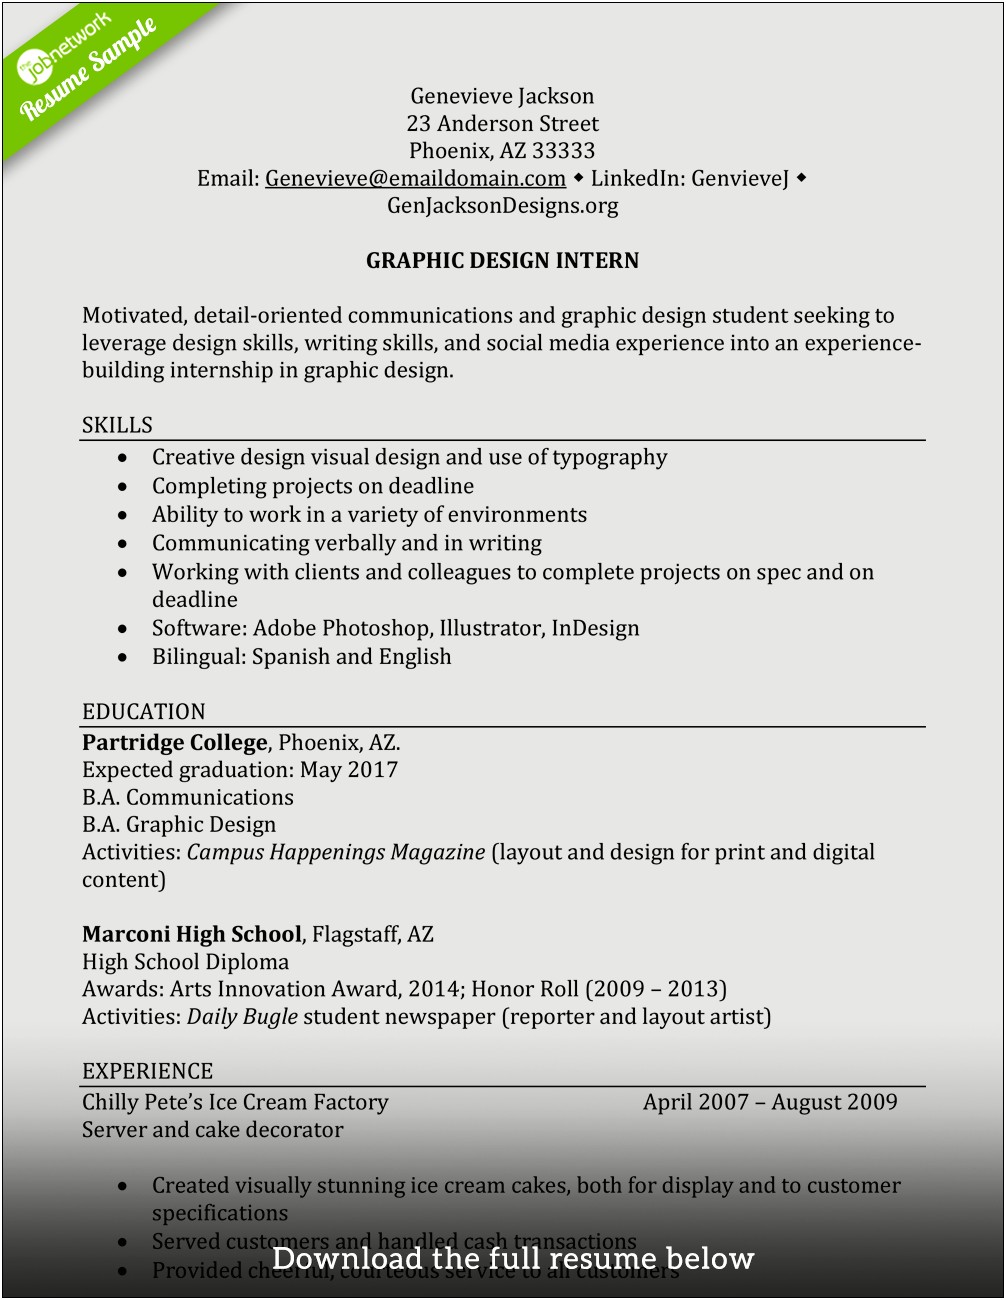 Best Resume For Summer Internship